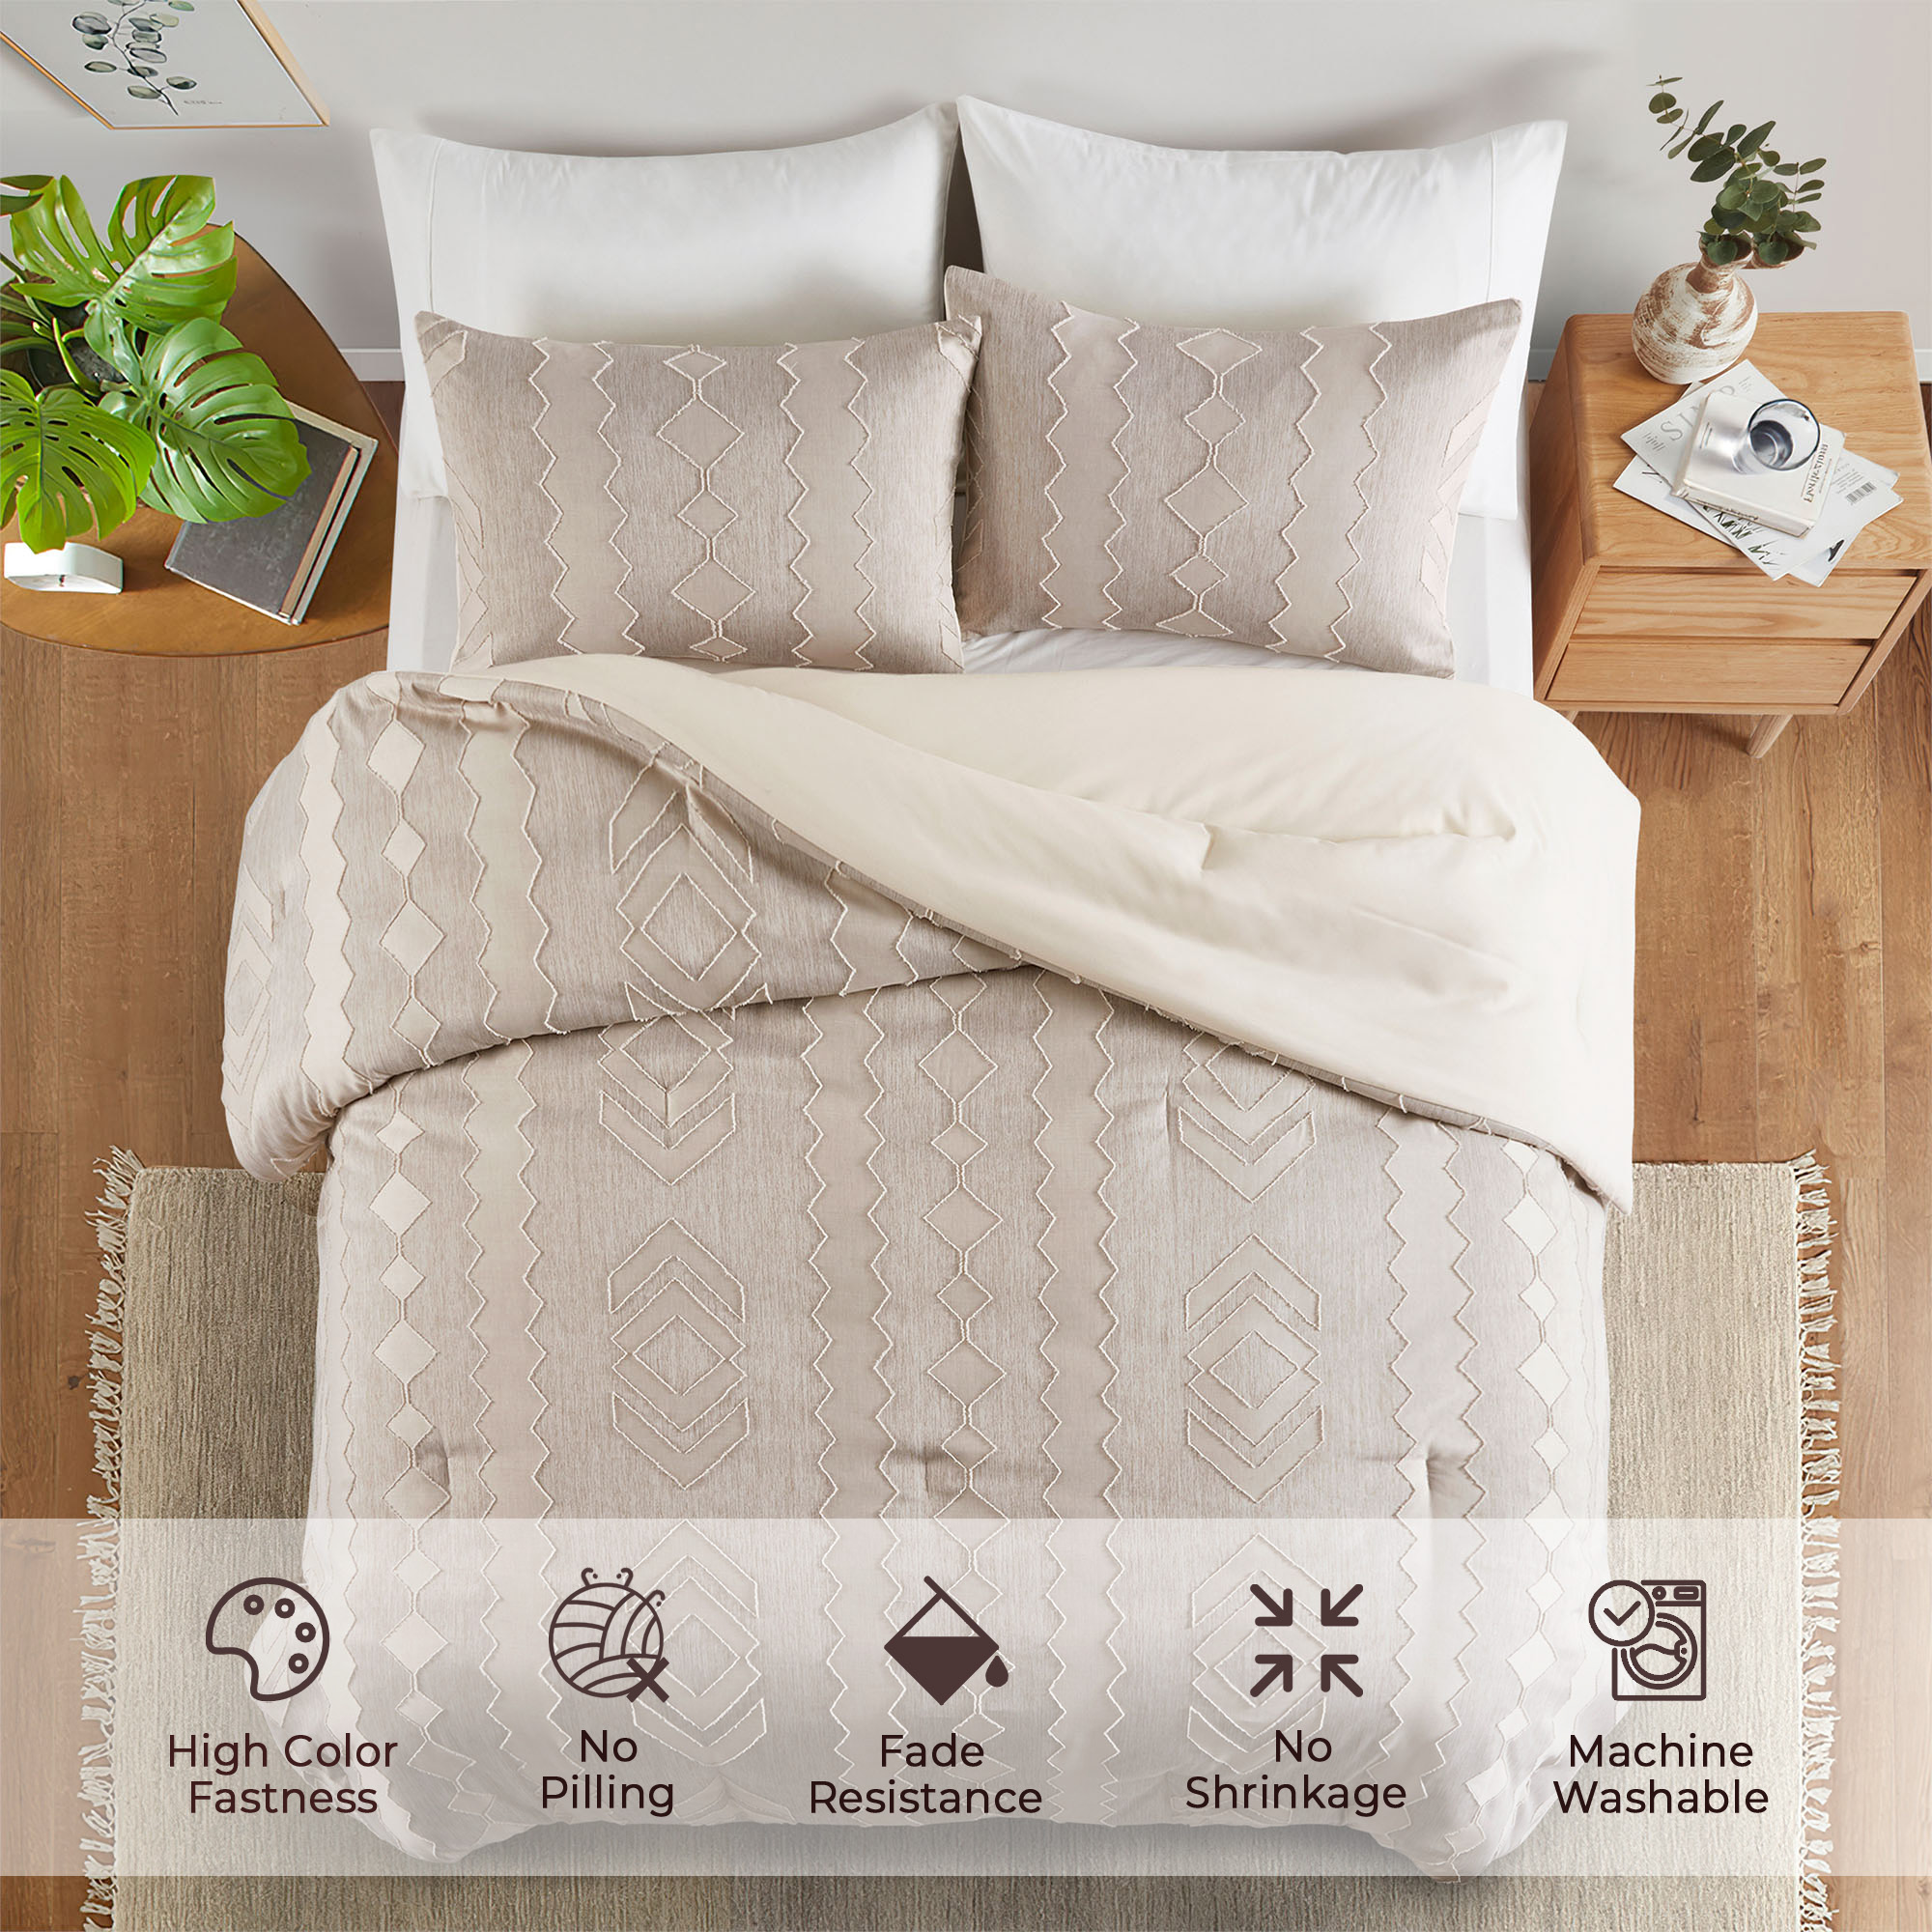 Peace Nest 3-Piece All Season Clipped Jacquard Down Alternative Comforter Set, Beige, King - image 4 of 5